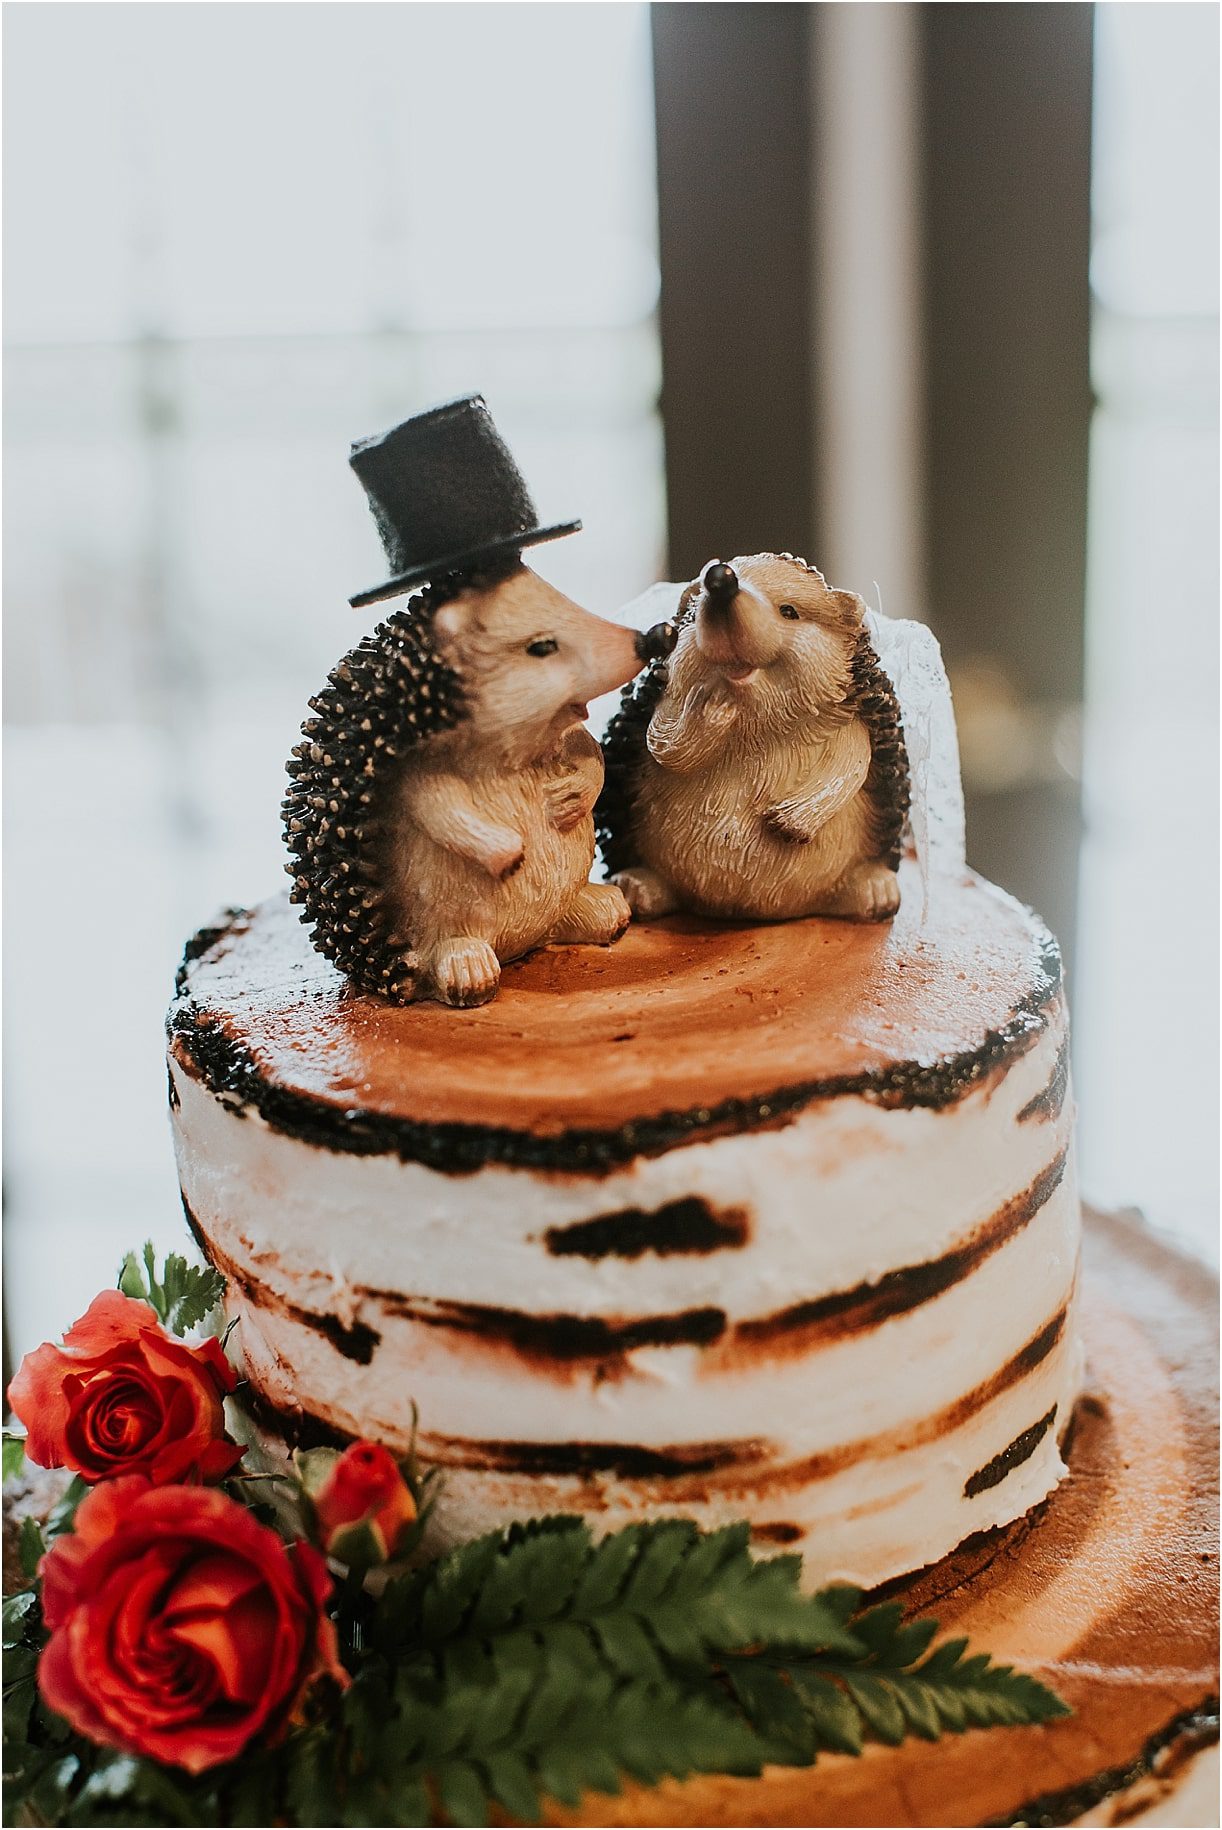 Lovely Virginia Vineyard Wedding as seen on Hill City Bride Blog by Vness Photography - cake, hedgehog